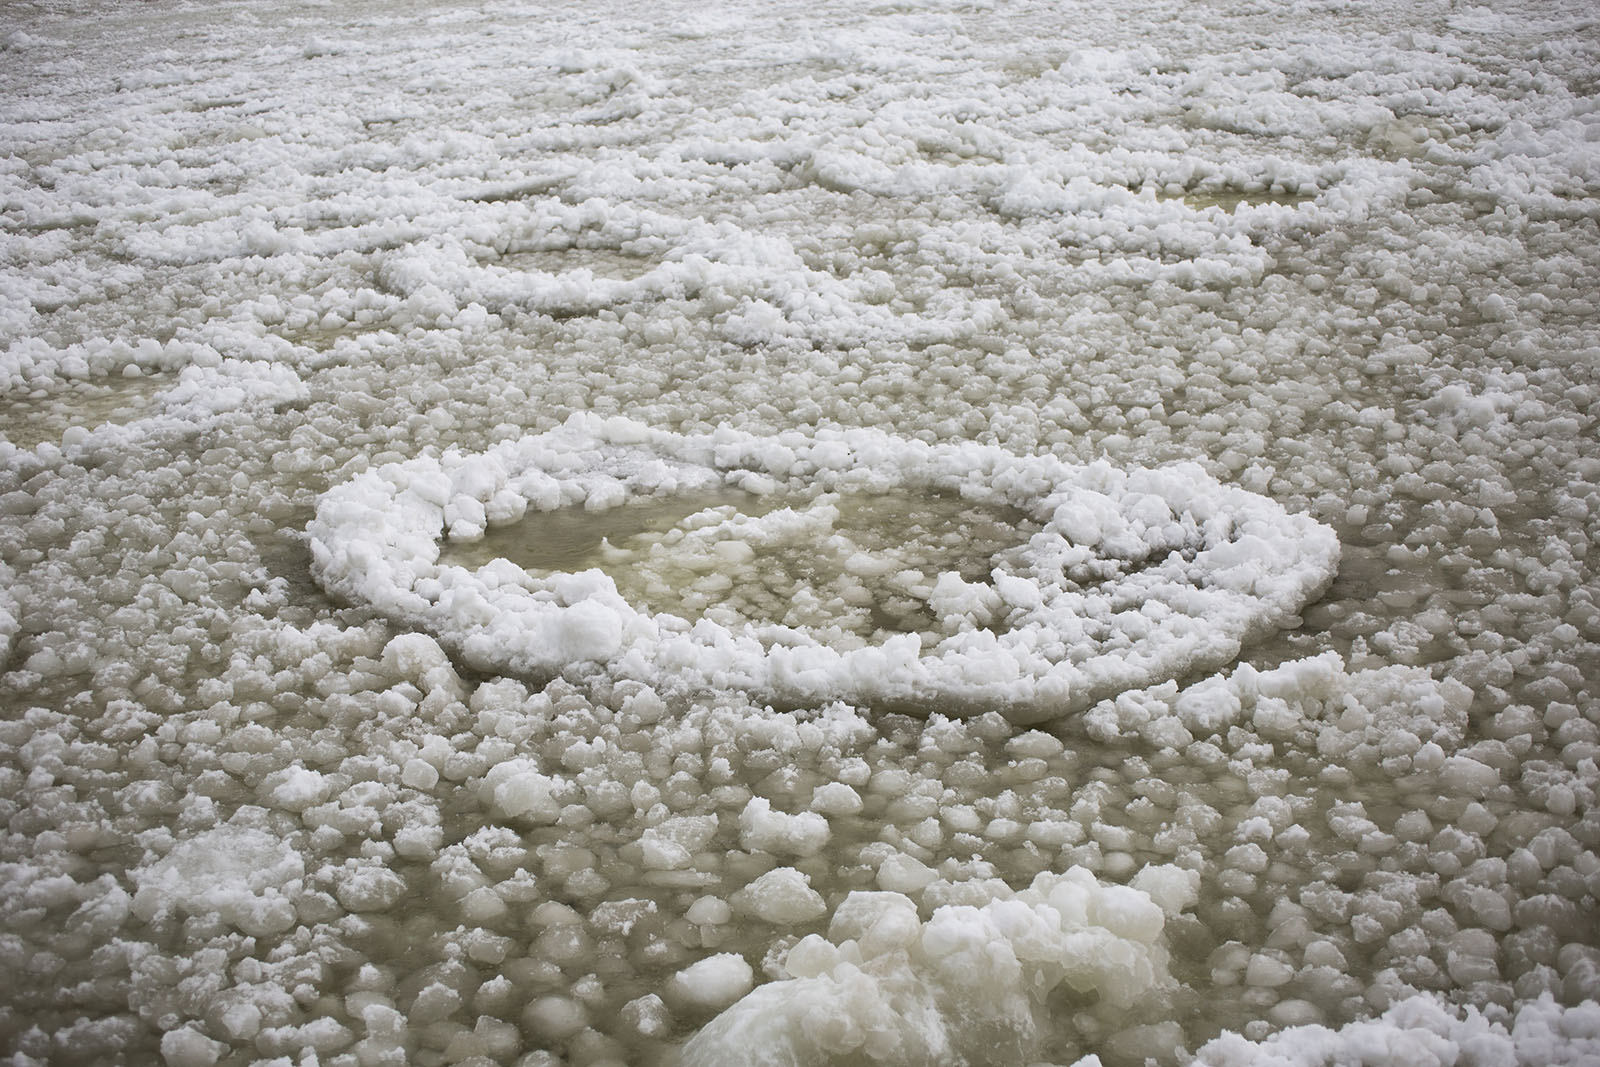 Ice formation in lake that looks like pancake